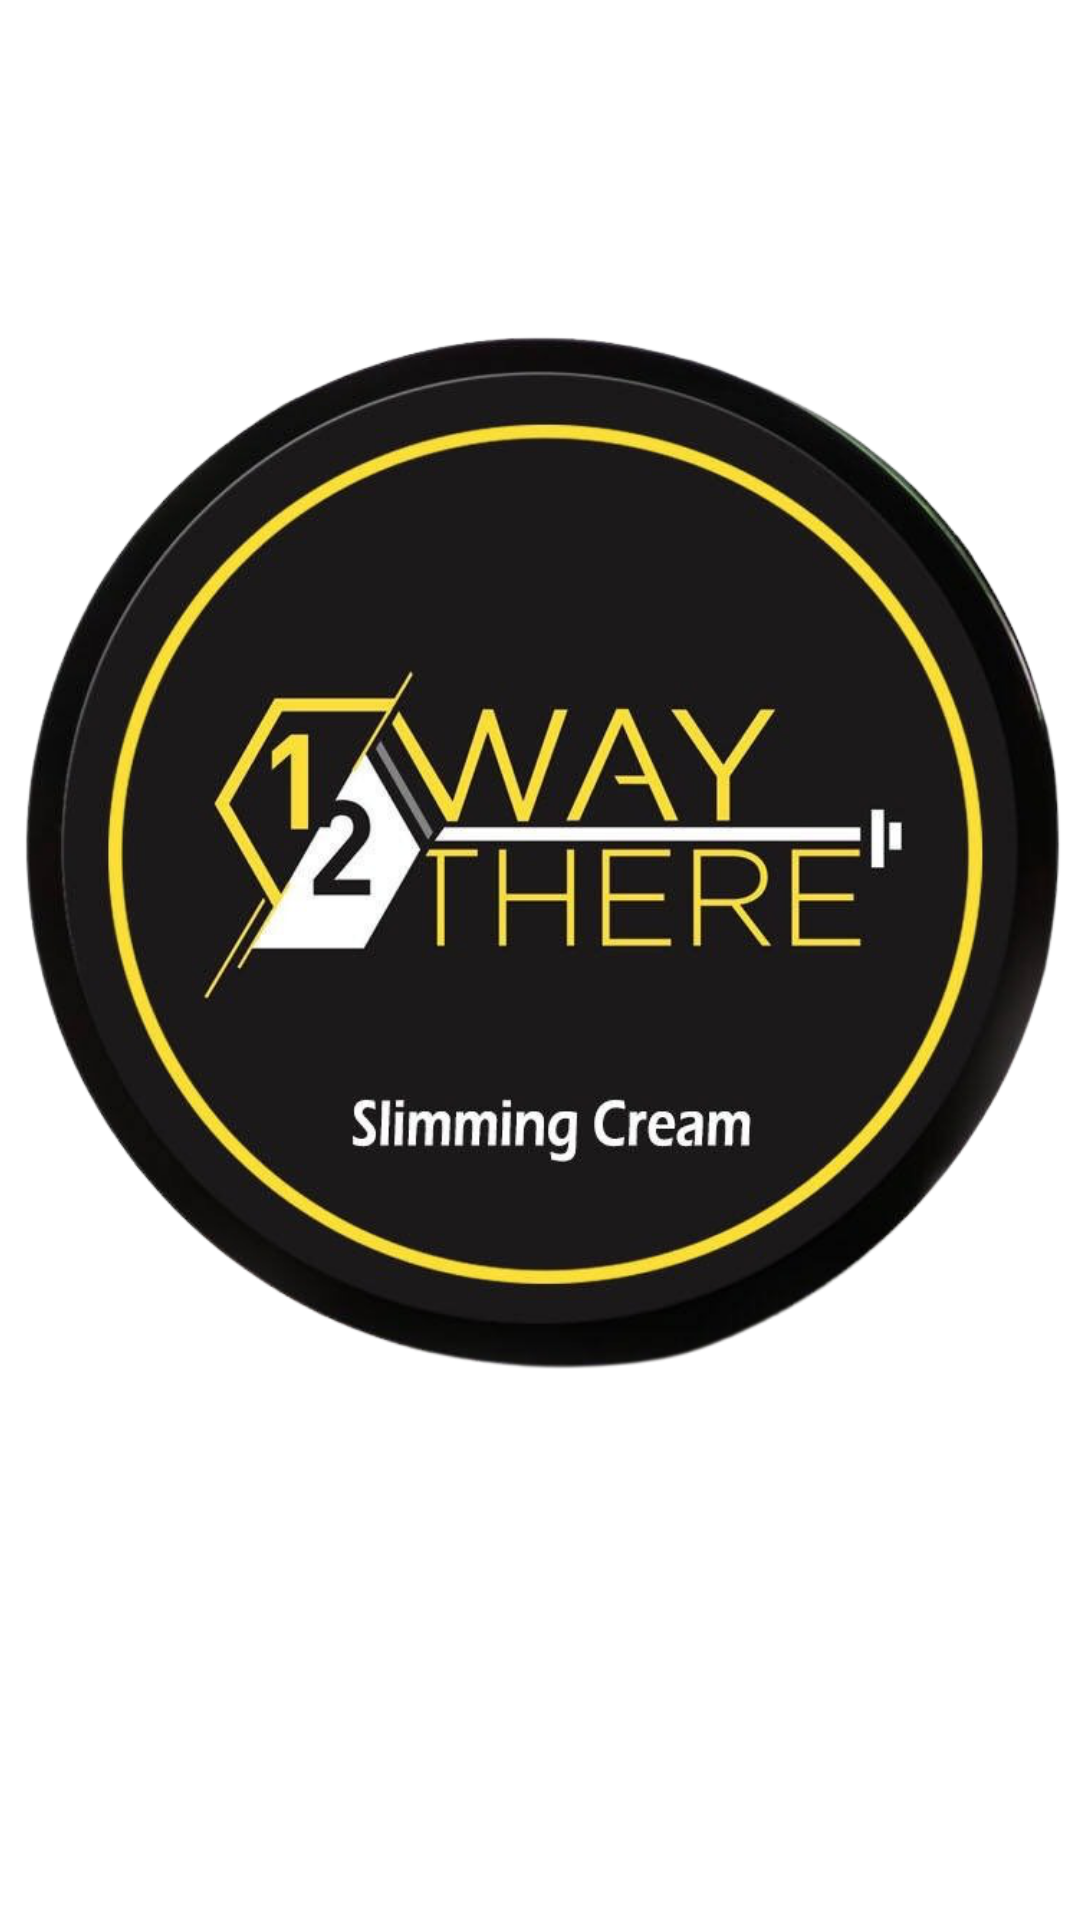 HWT Slimming Cream